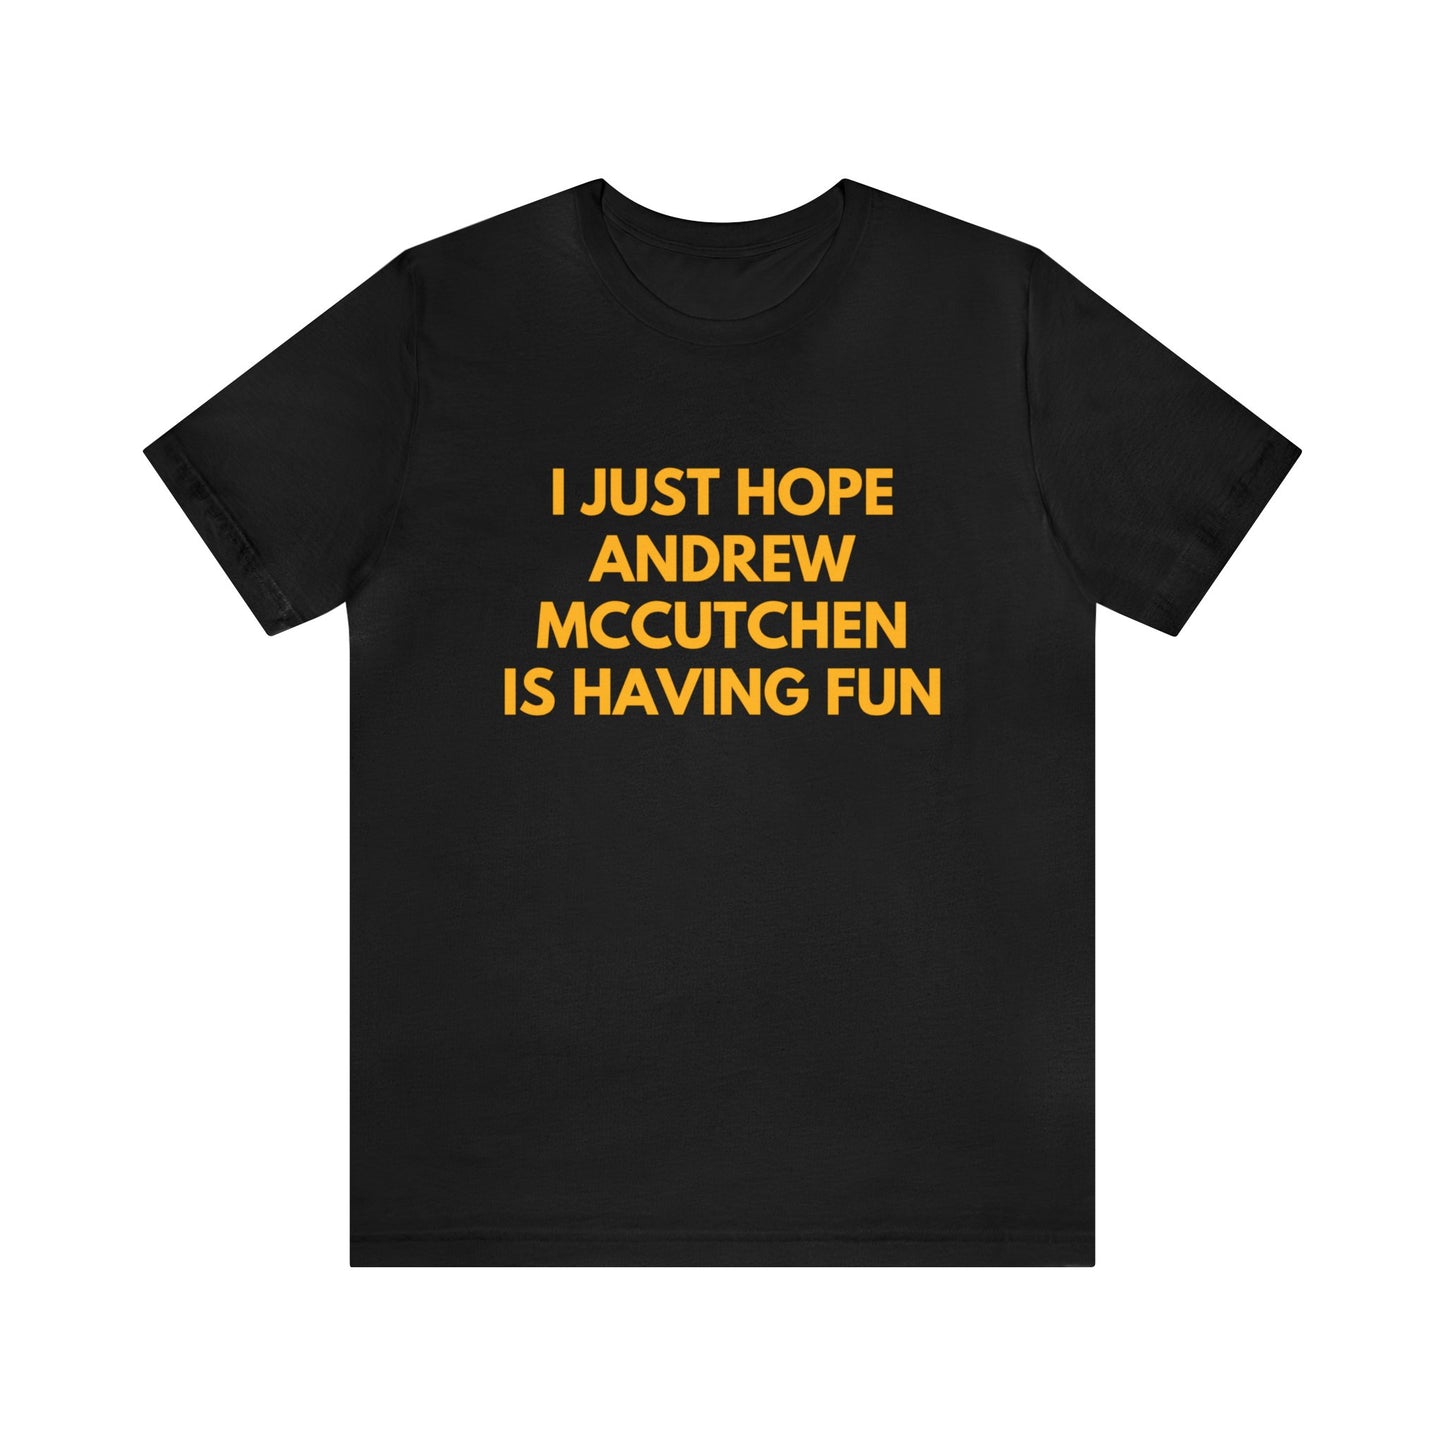 Andrew McCutchen Having Fun - Unisex T-shirt